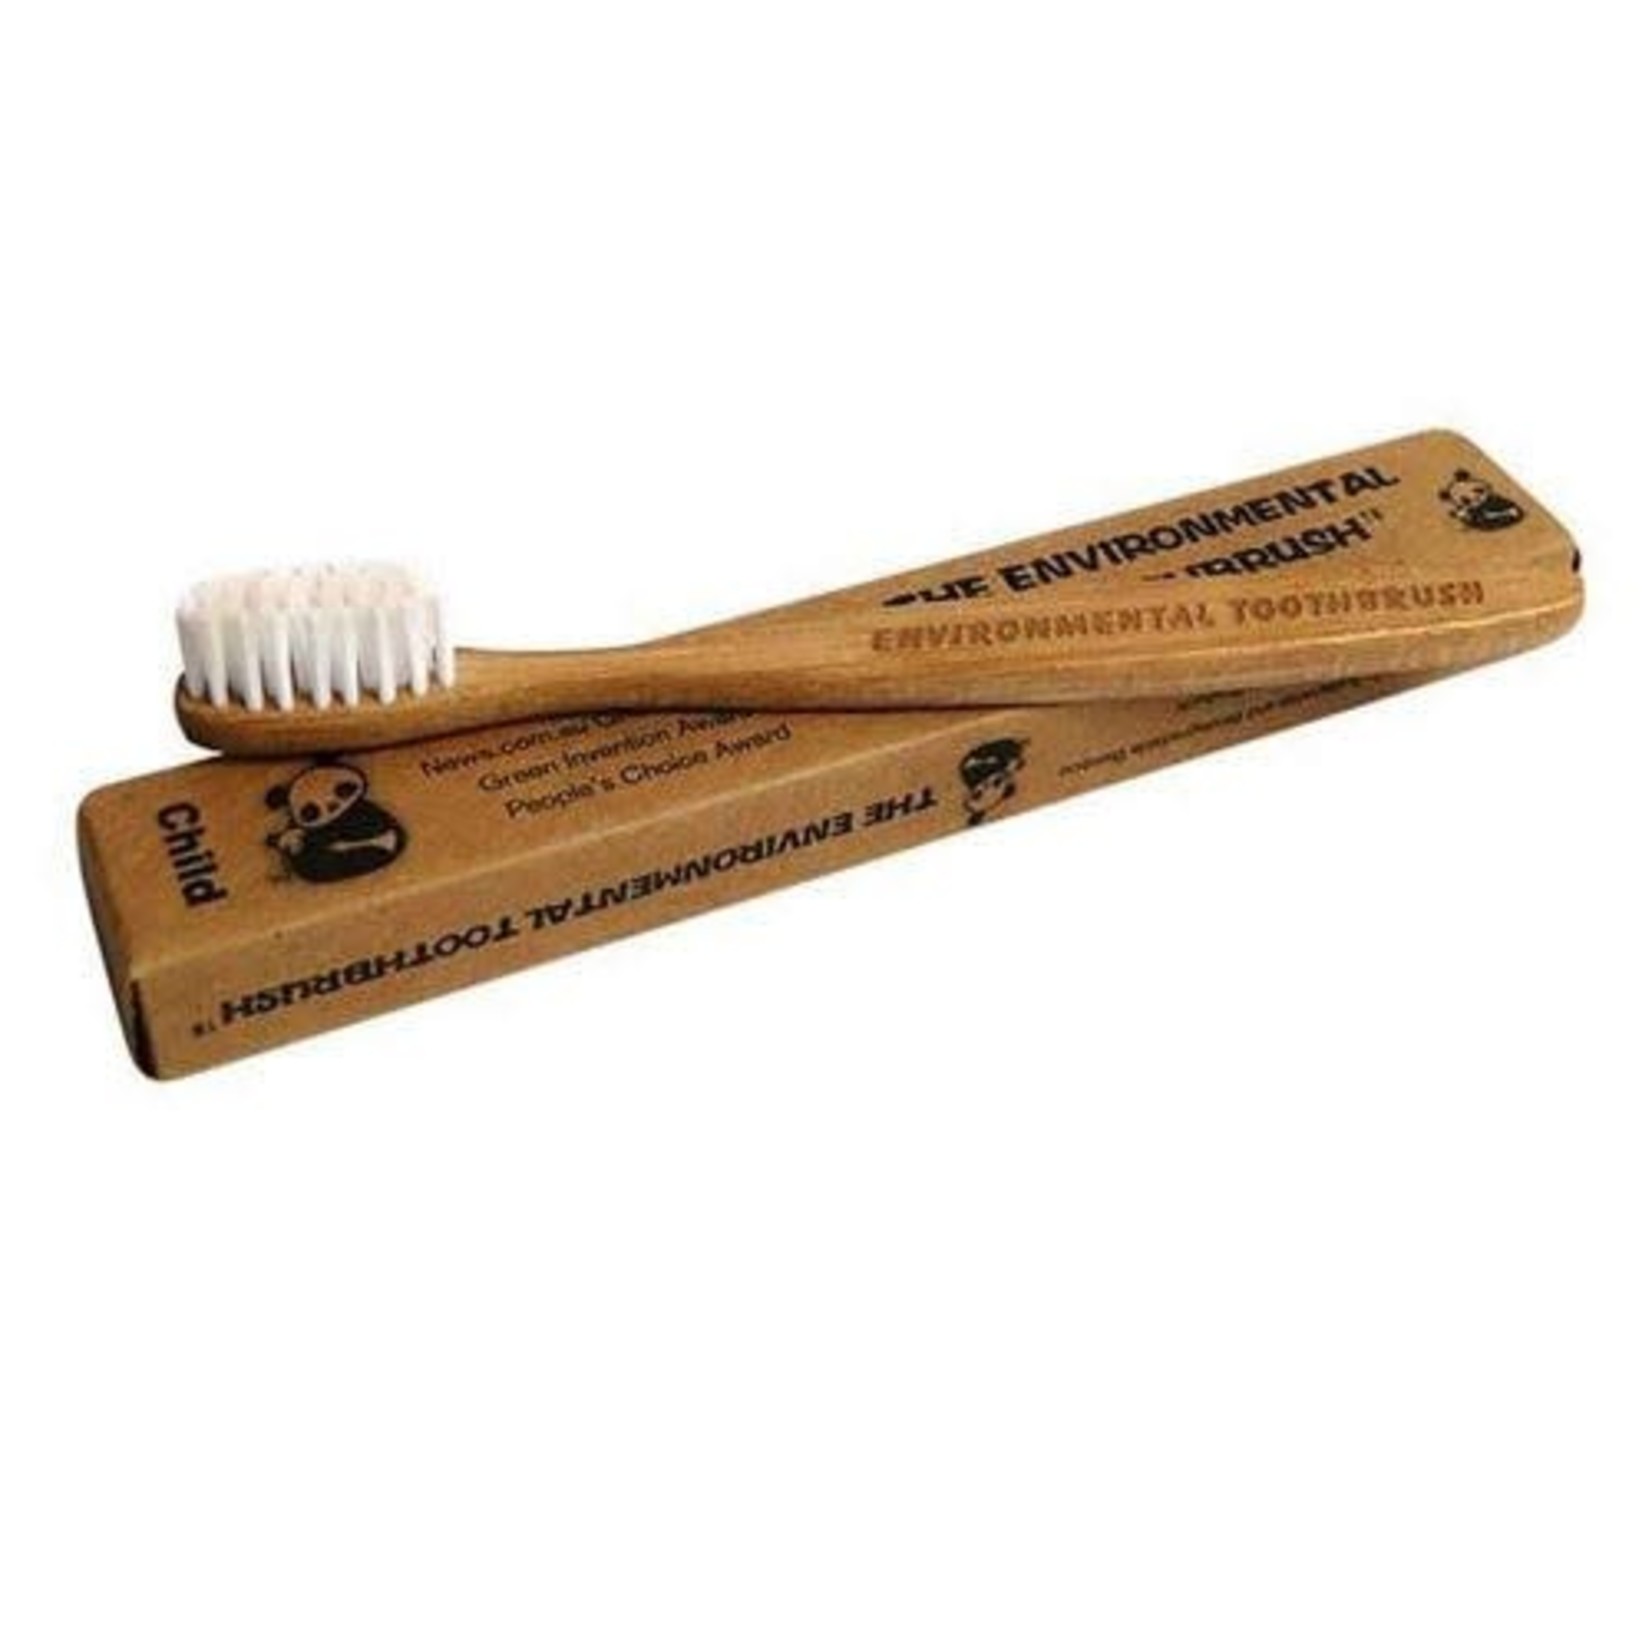 The Original Environmental Toothbrush The Original Environmental Toothbrush